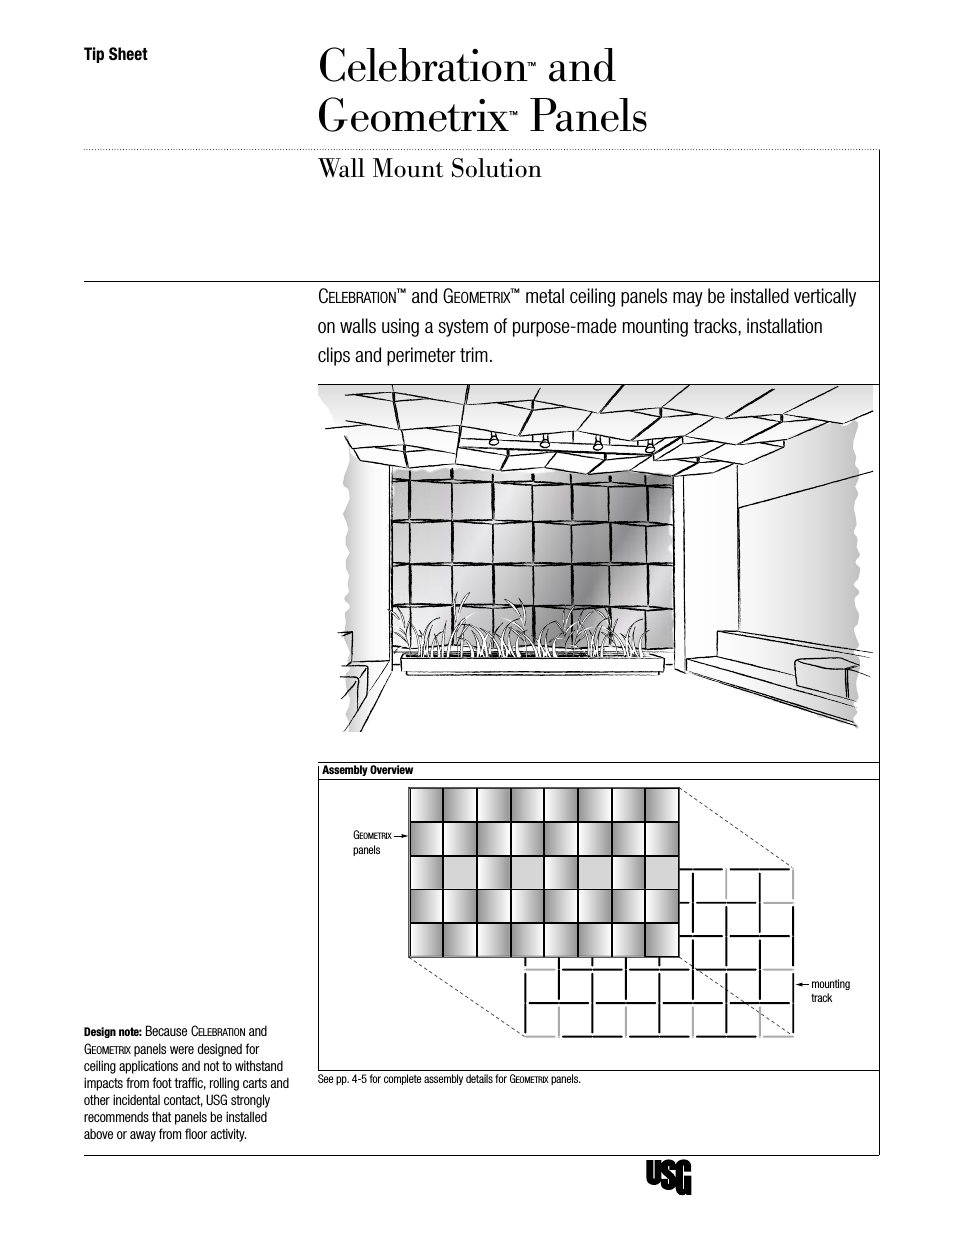 Geometrix Panels Wall Mount Solution